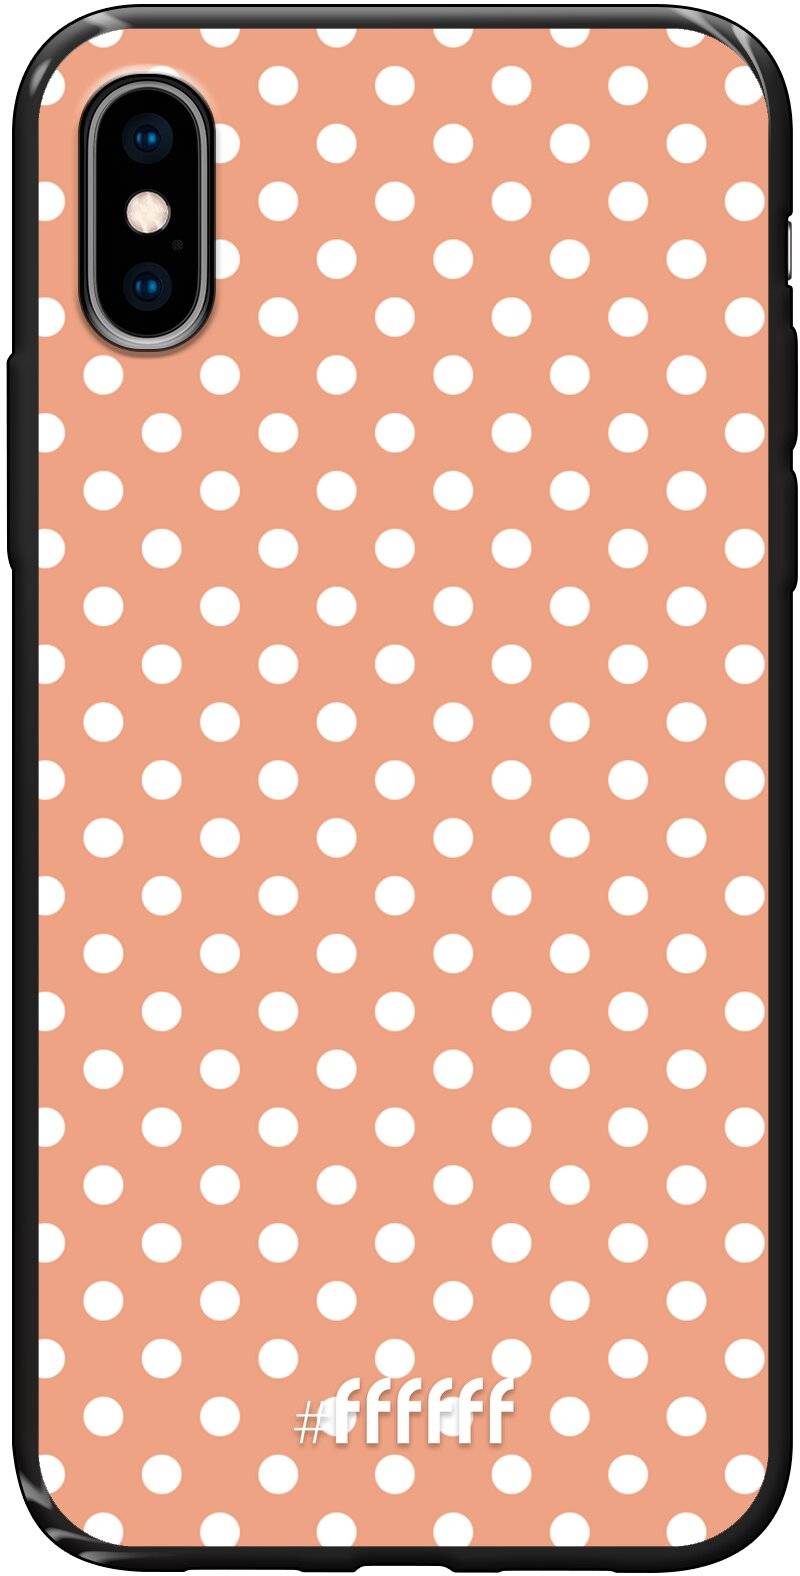 Peachy Dots iPhone X